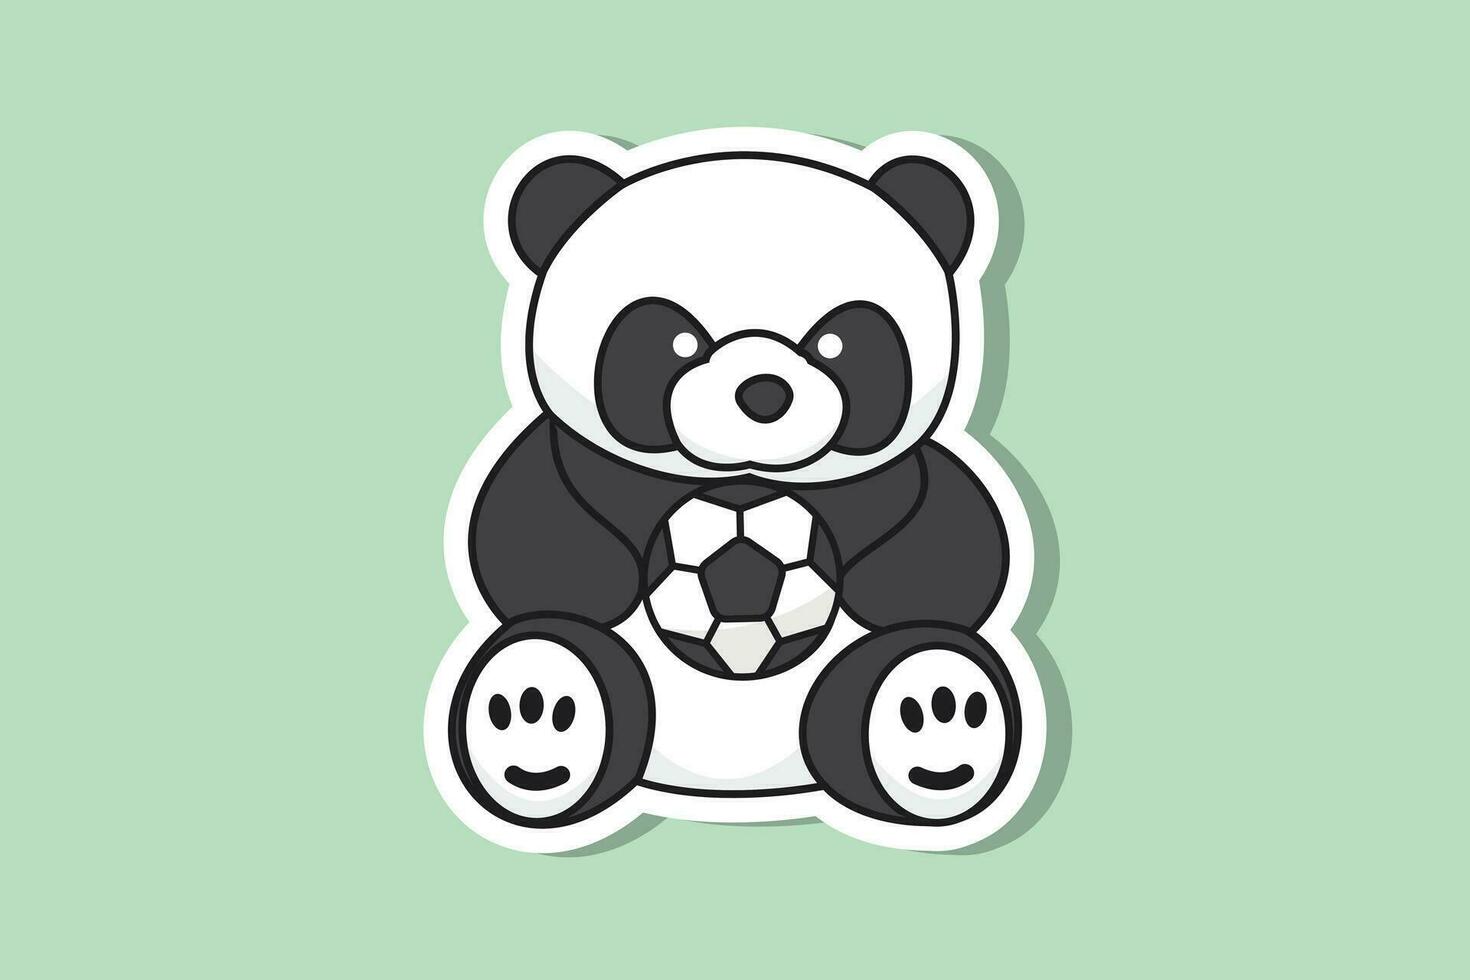 Cute Teddy Bear with football sticker design vector illustration. Animal nature icon concept. Flat cartoon style icon design.